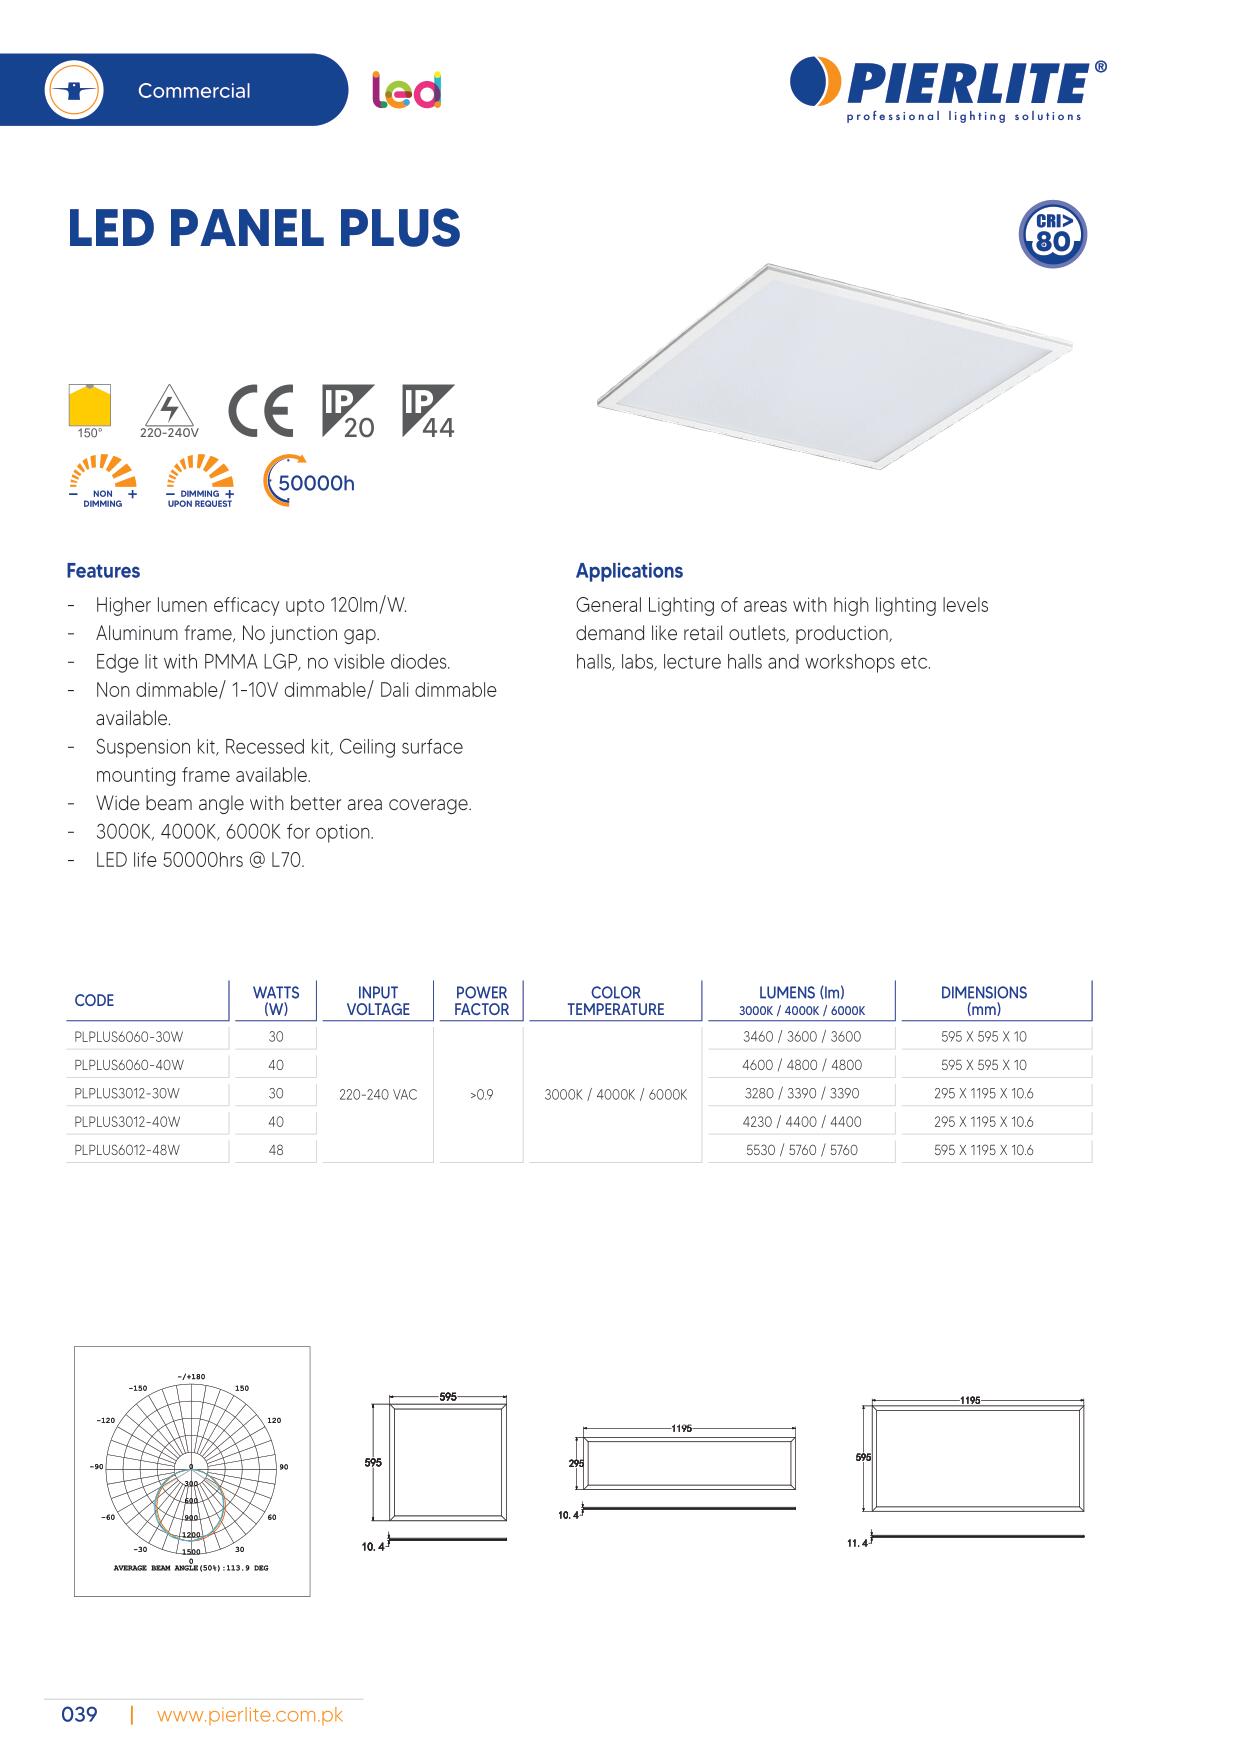 Pierlite LED Luminaire Catalog 2021-48